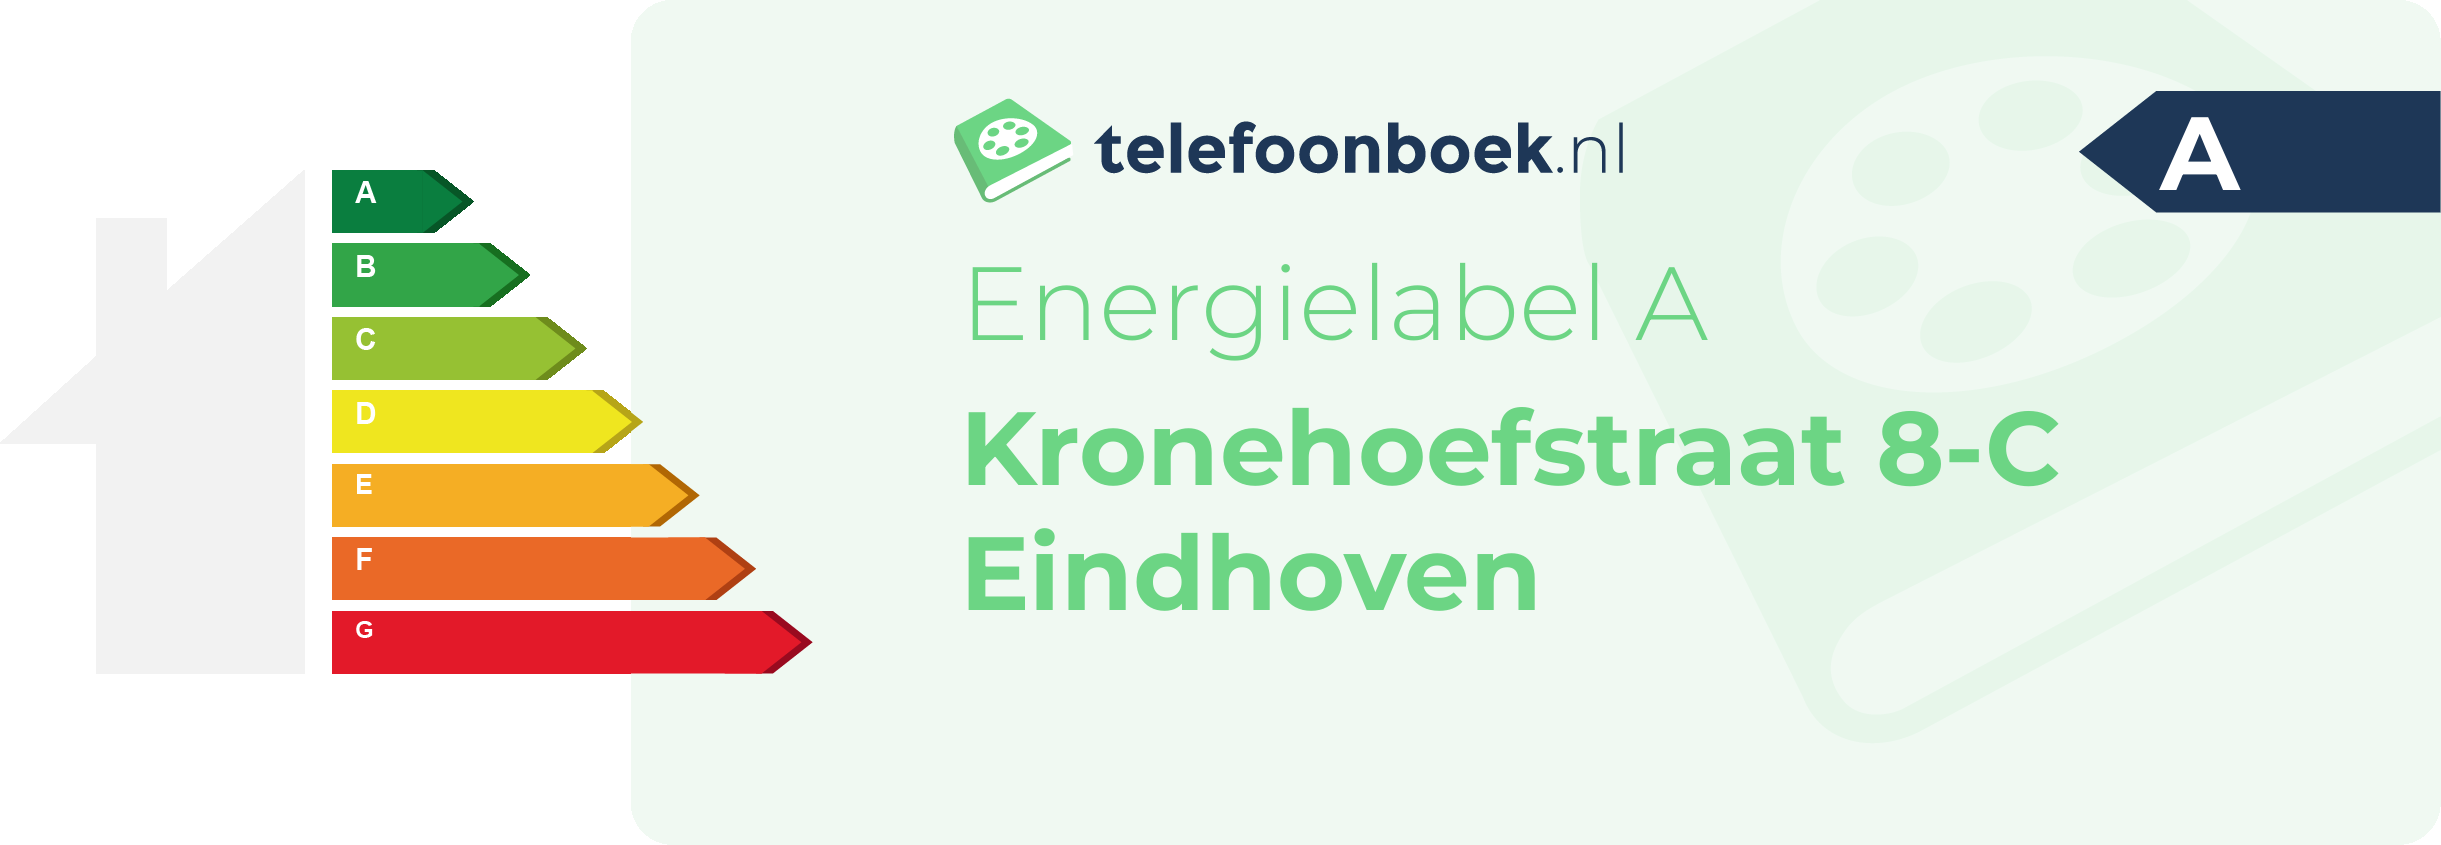 Energielabel Kronehoefstraat 8-C Eindhoven